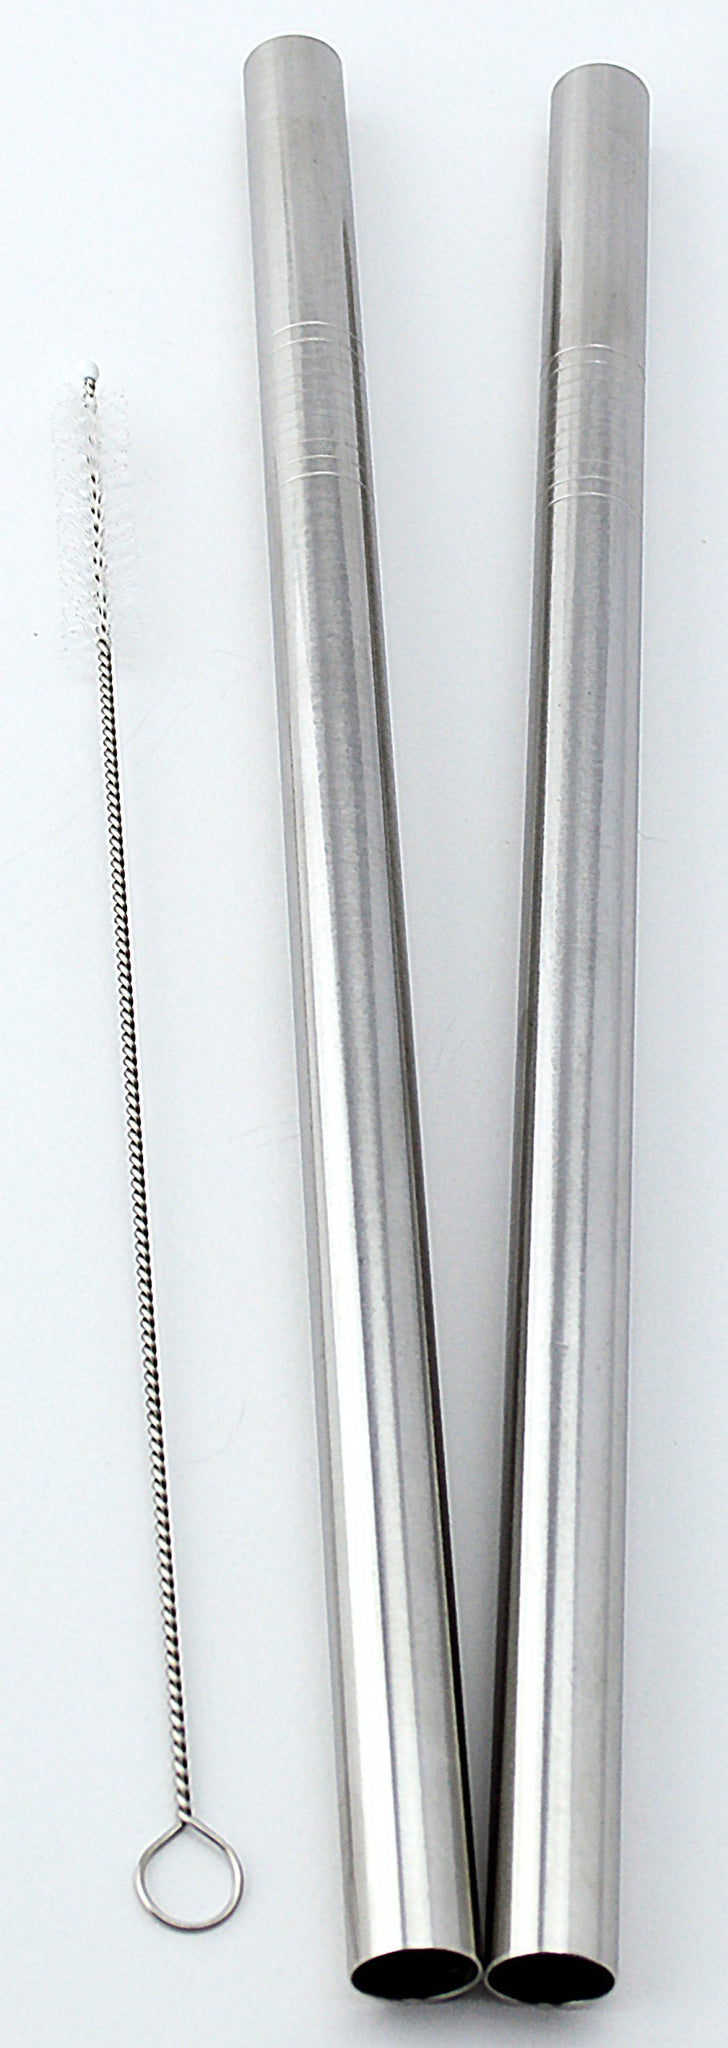 Jumbo 12mm Super Thick Stainless steel Straws